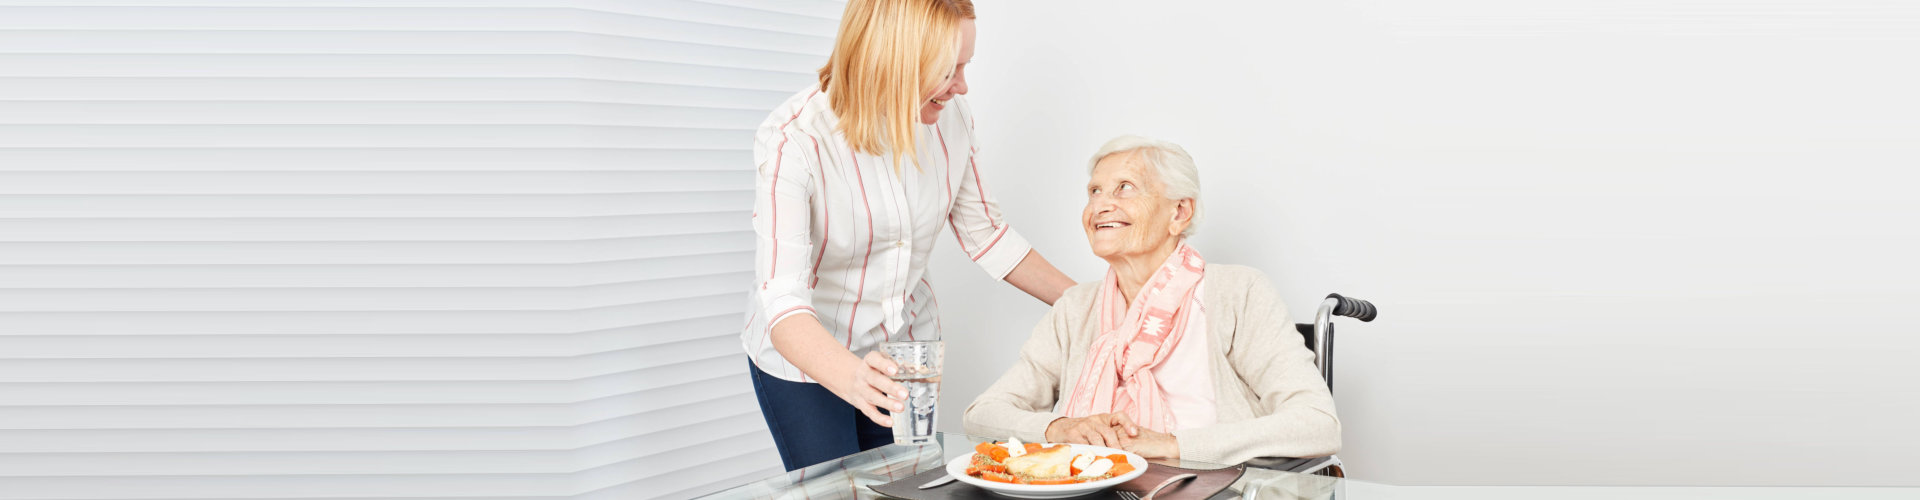 caregiver and elderly having a meals